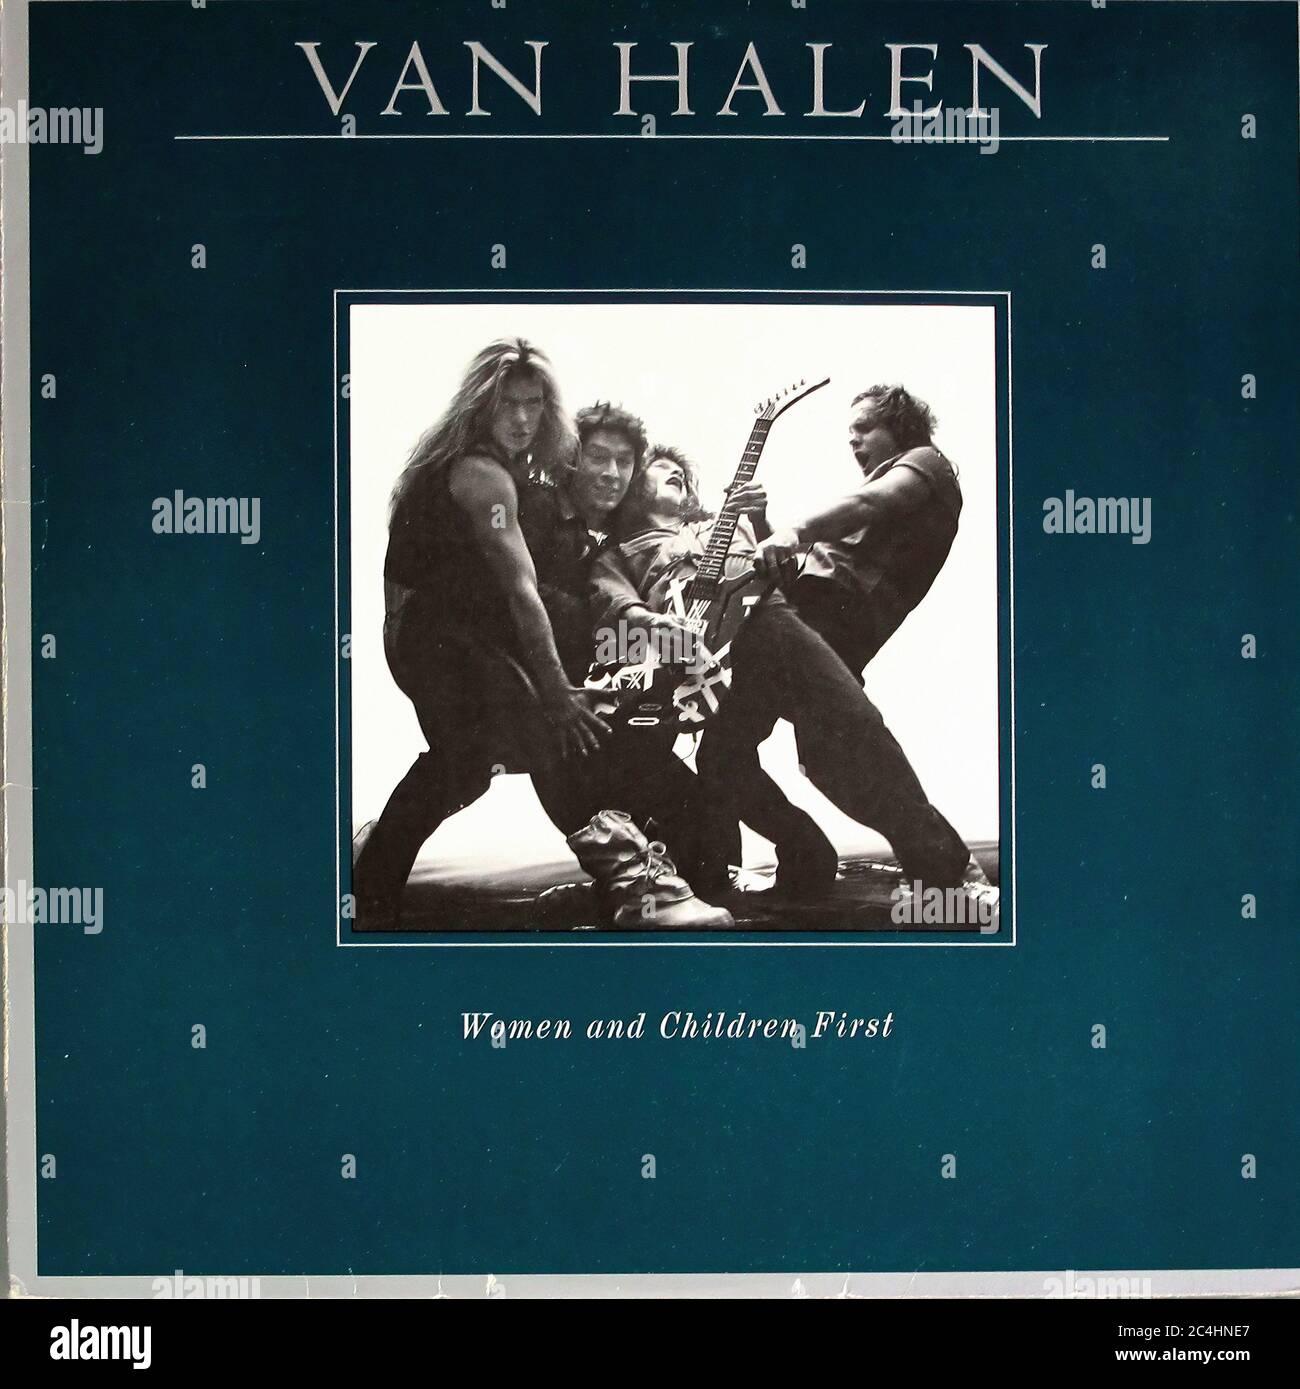 VAN HALEN - LP - Women and Children First